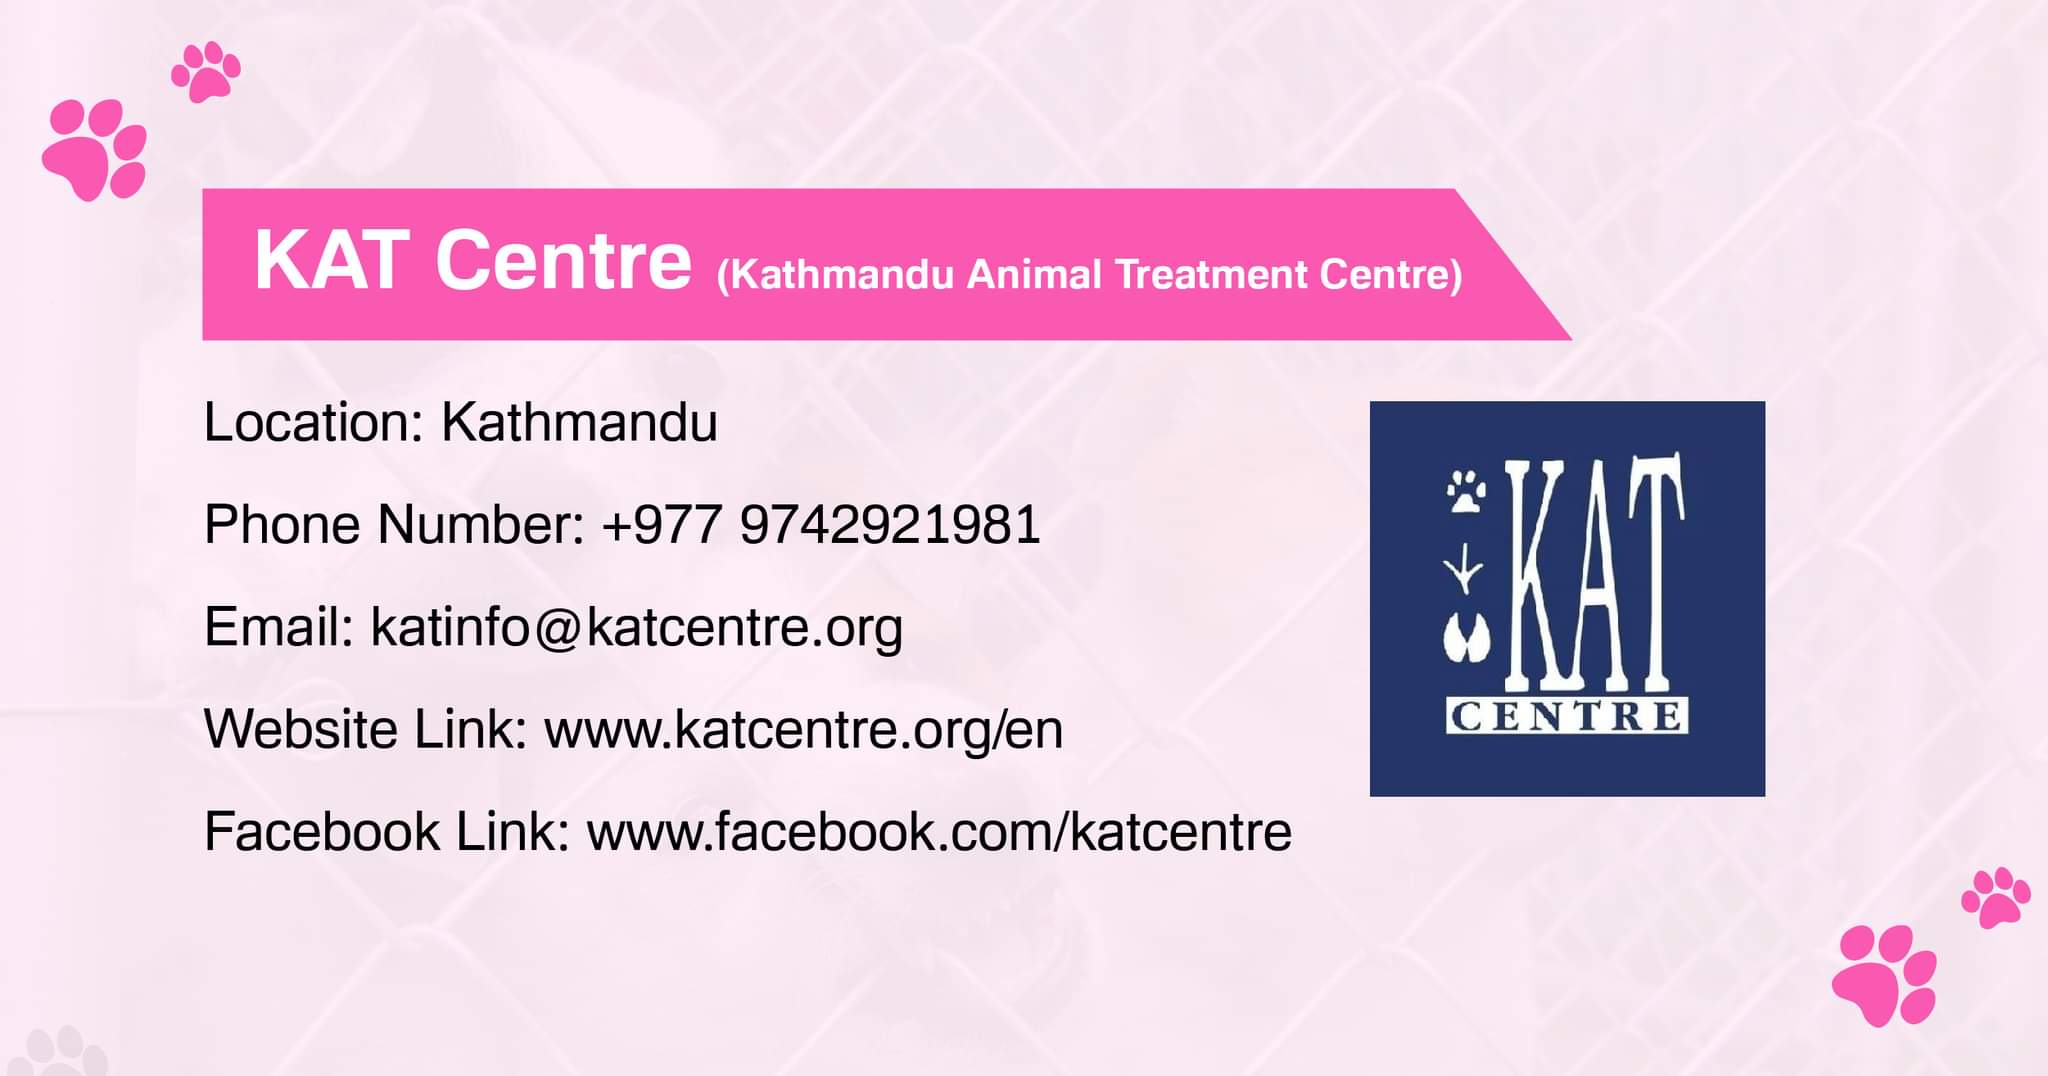 KAT Centre dog adoption